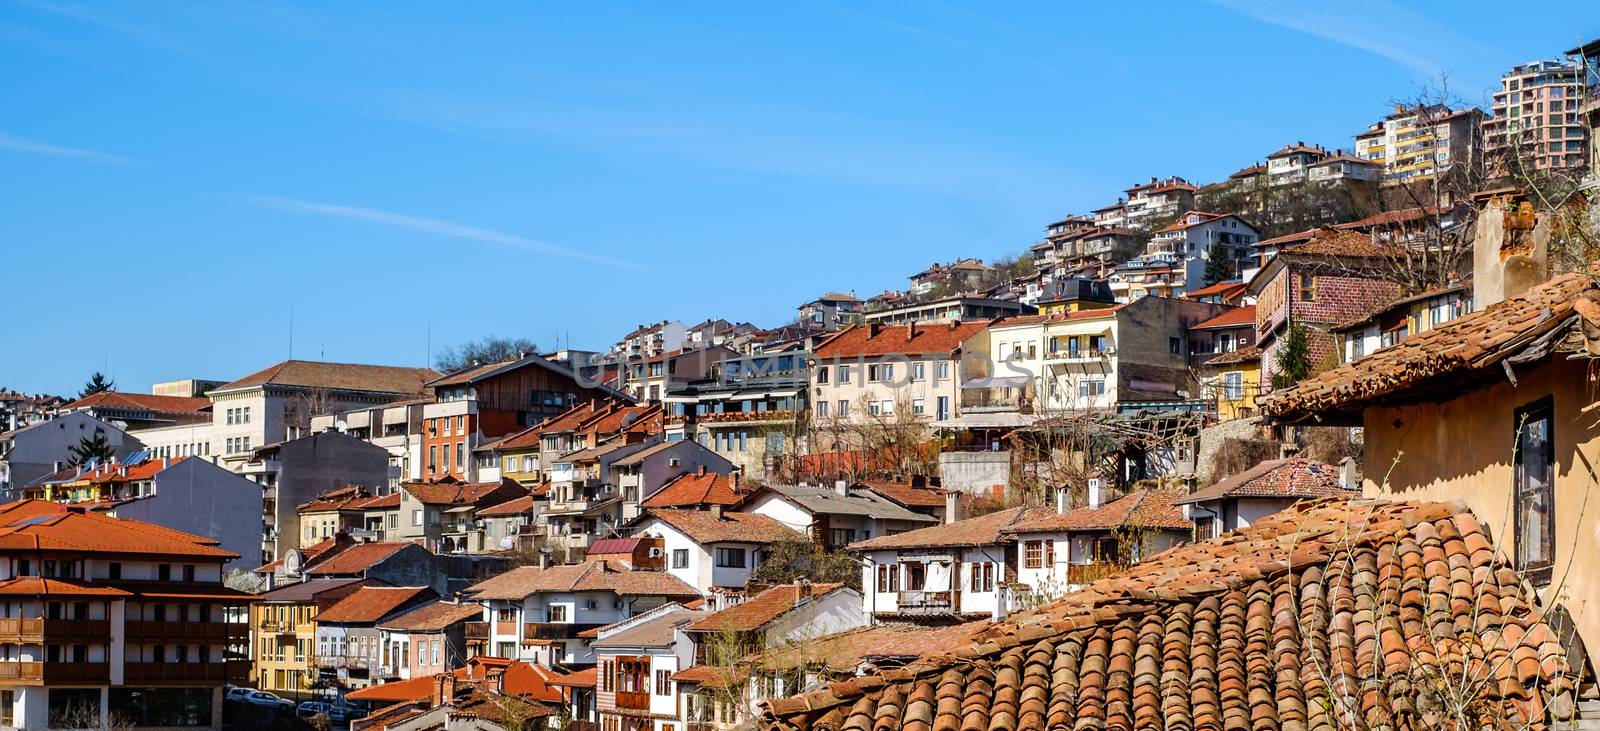 Veliko Tarnovo city, Bulgaria - March 24, 2017. Panoramic view over the old city